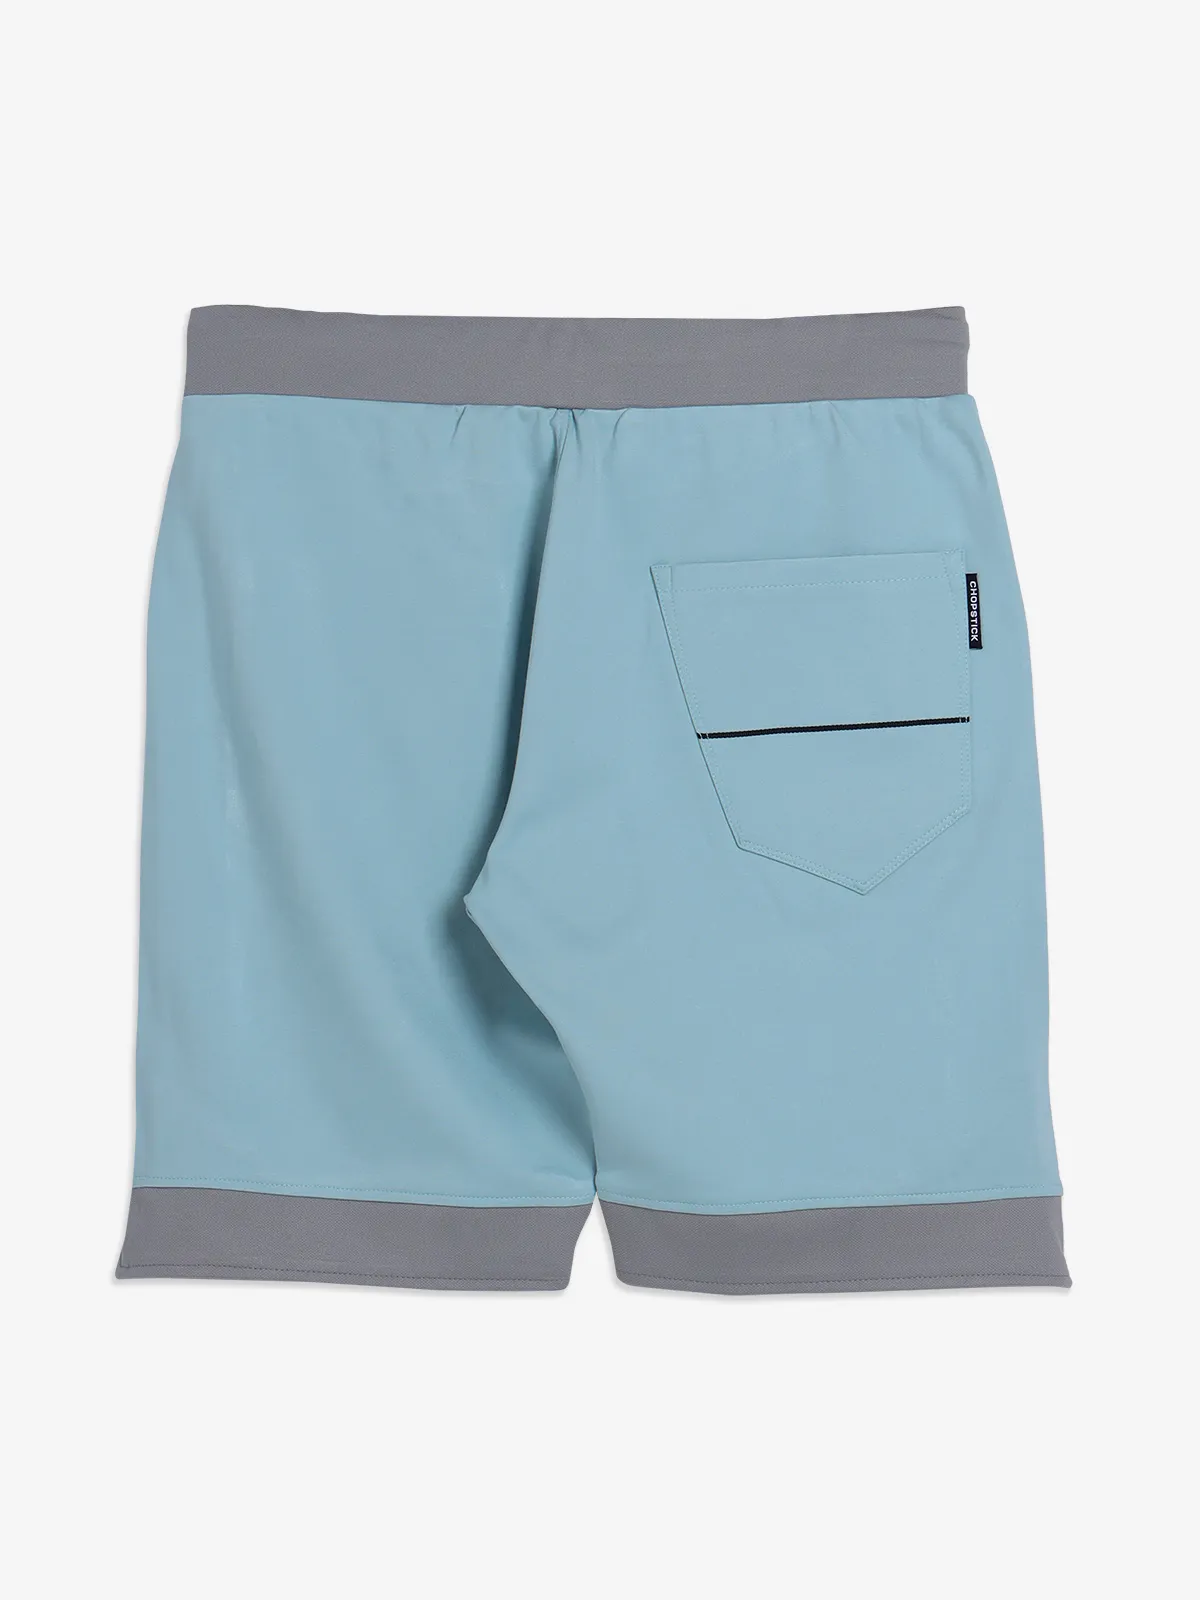 CHOPSTICK sky blue solid cotton shorts